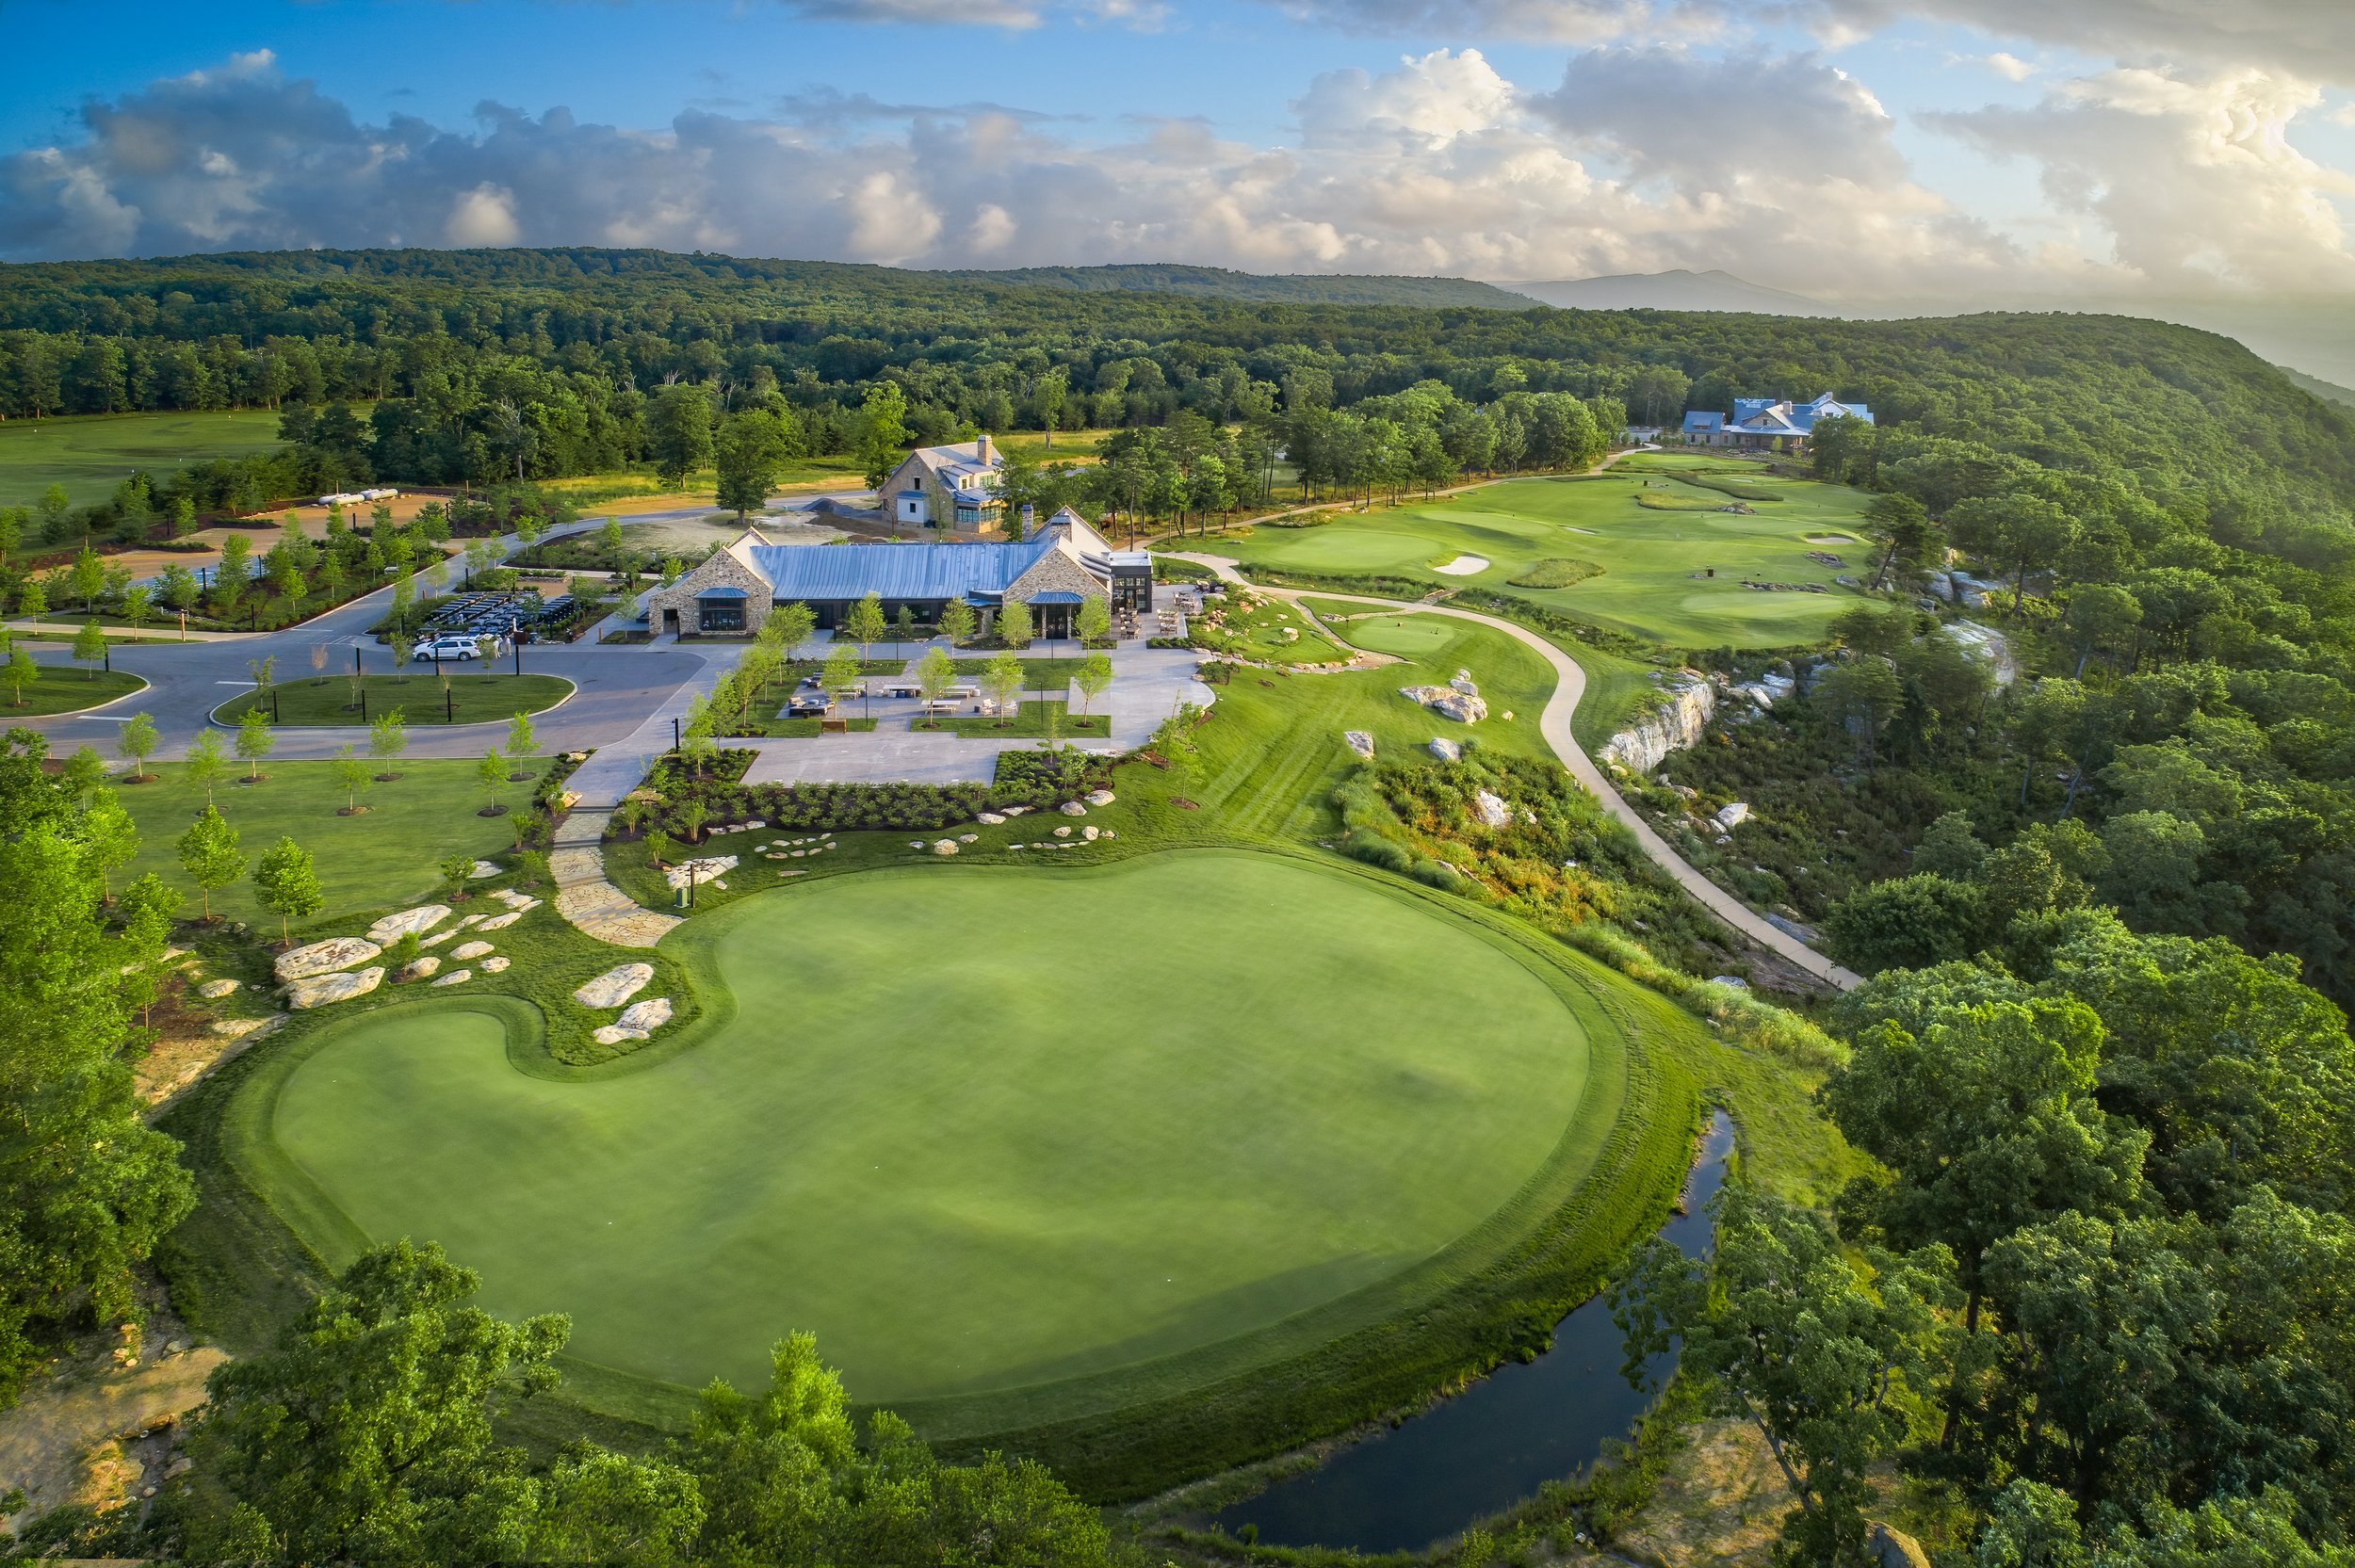 II. Factors to Consider When Choosing a Golf Resort